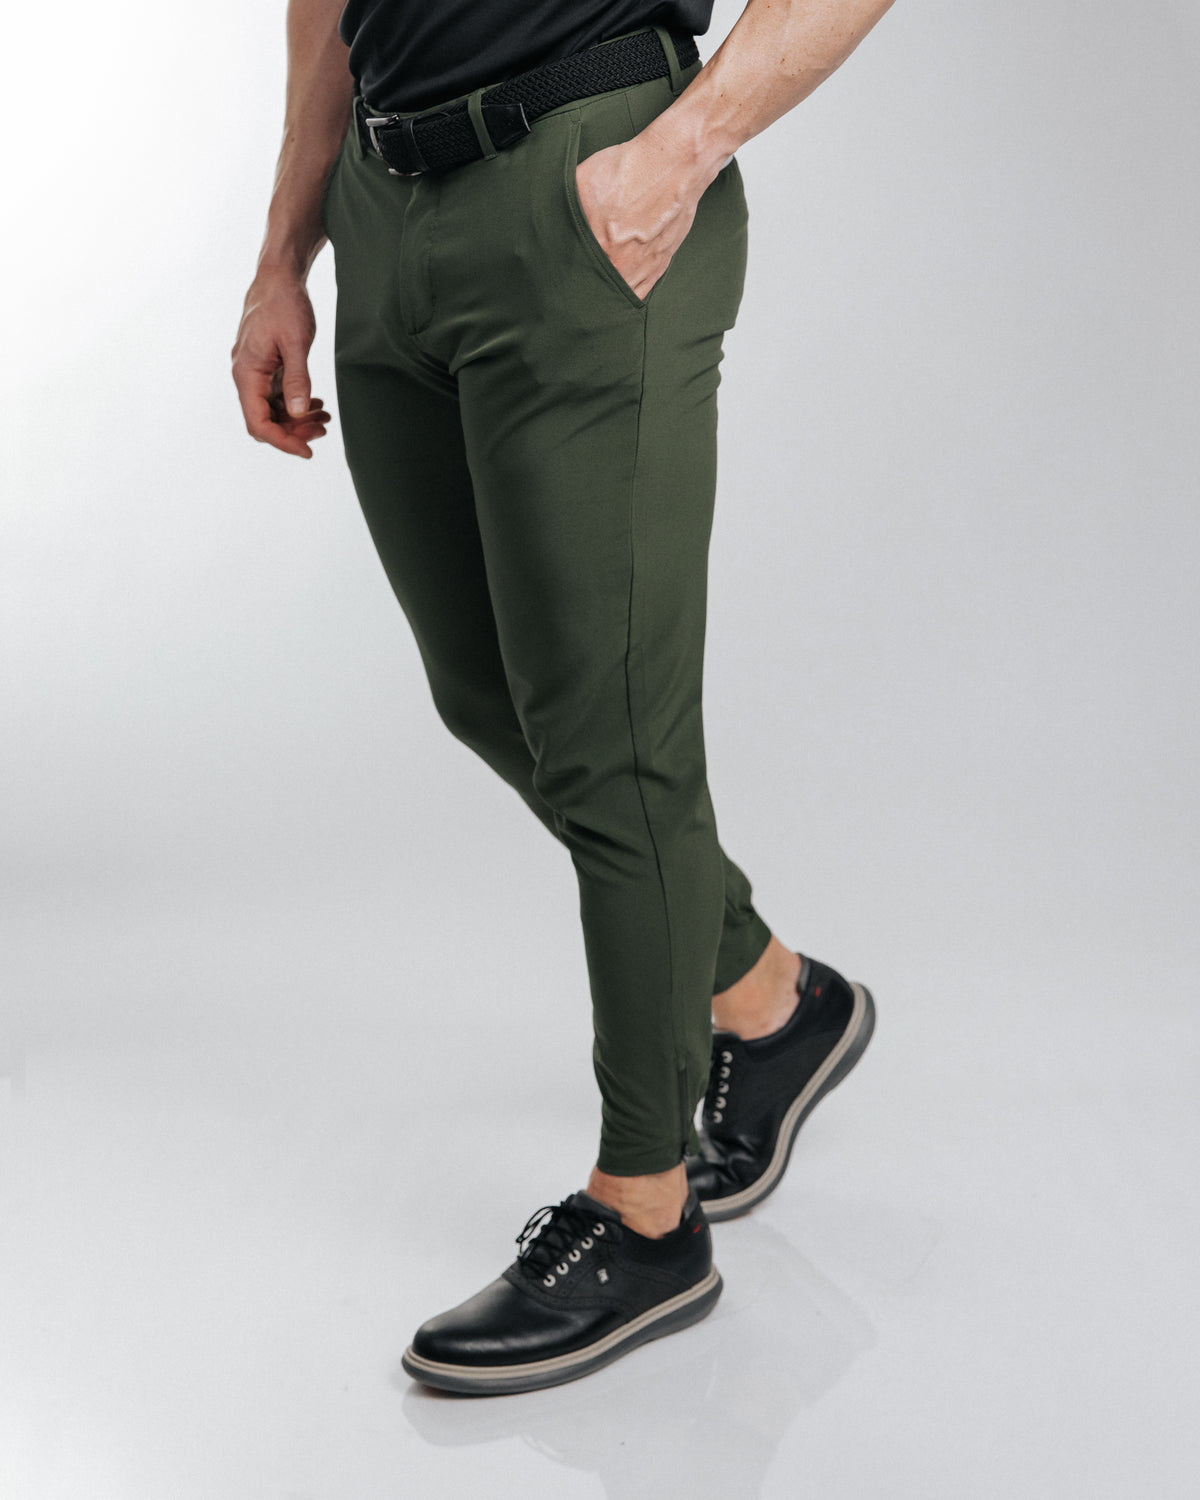 Eodora Yoga Joggers Elastic Waist 3 Pockets Drawstring Tapered Lounge Pants  Olive M 